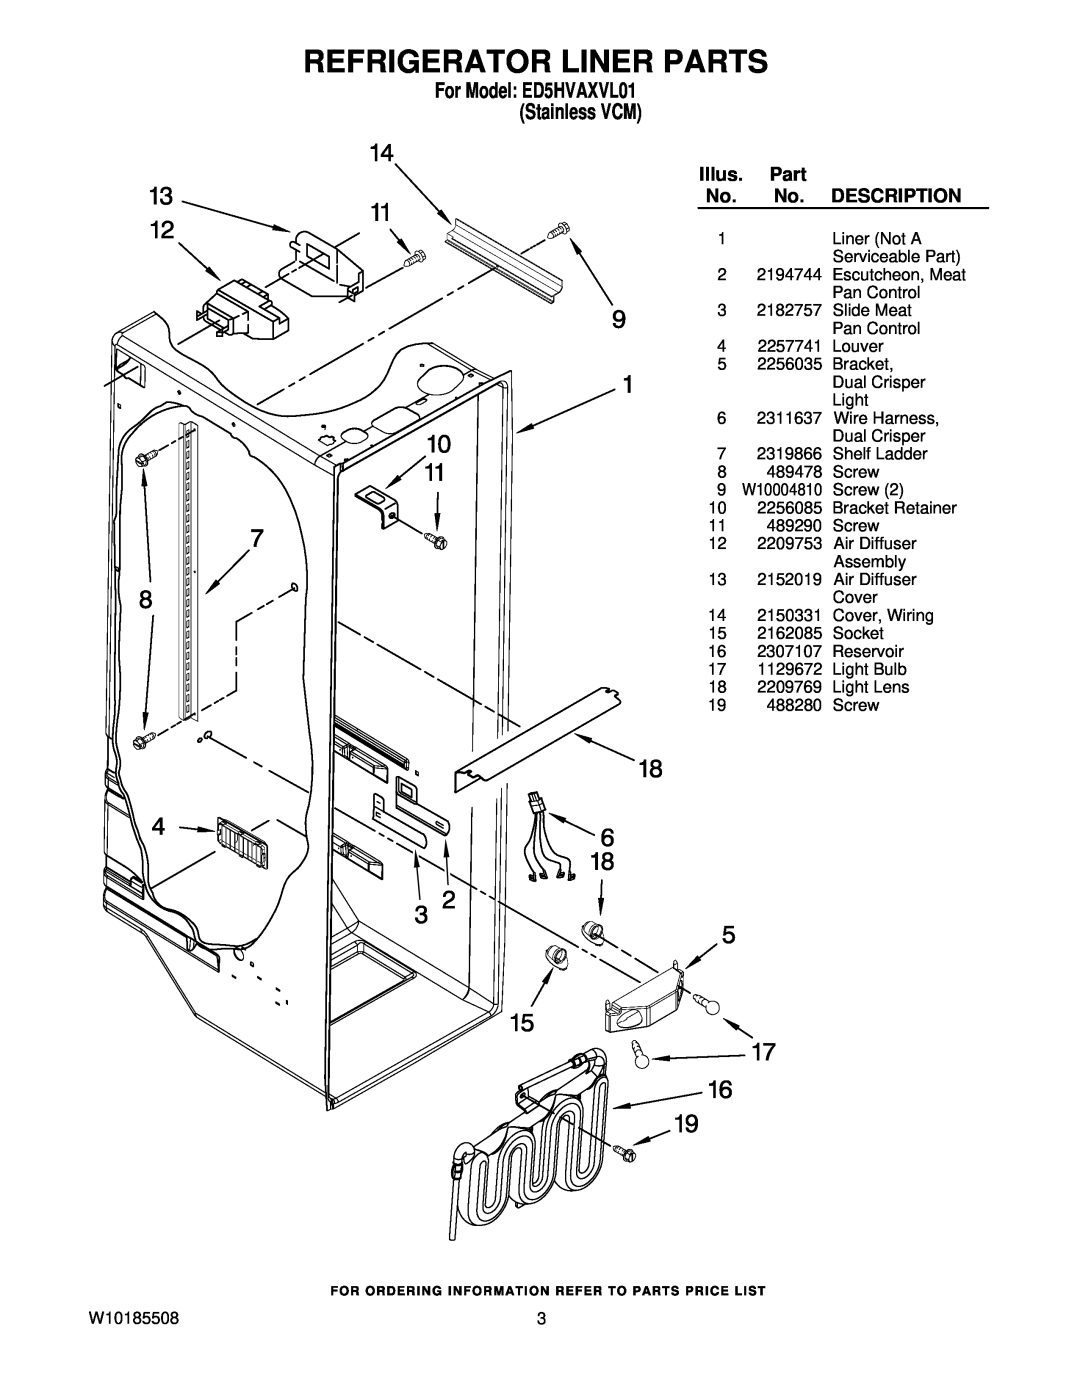 Whirlpool manual Refrigerator Liner Parts, For Model ED5HVAXVL01 Stainless VCM, Illus, Description 